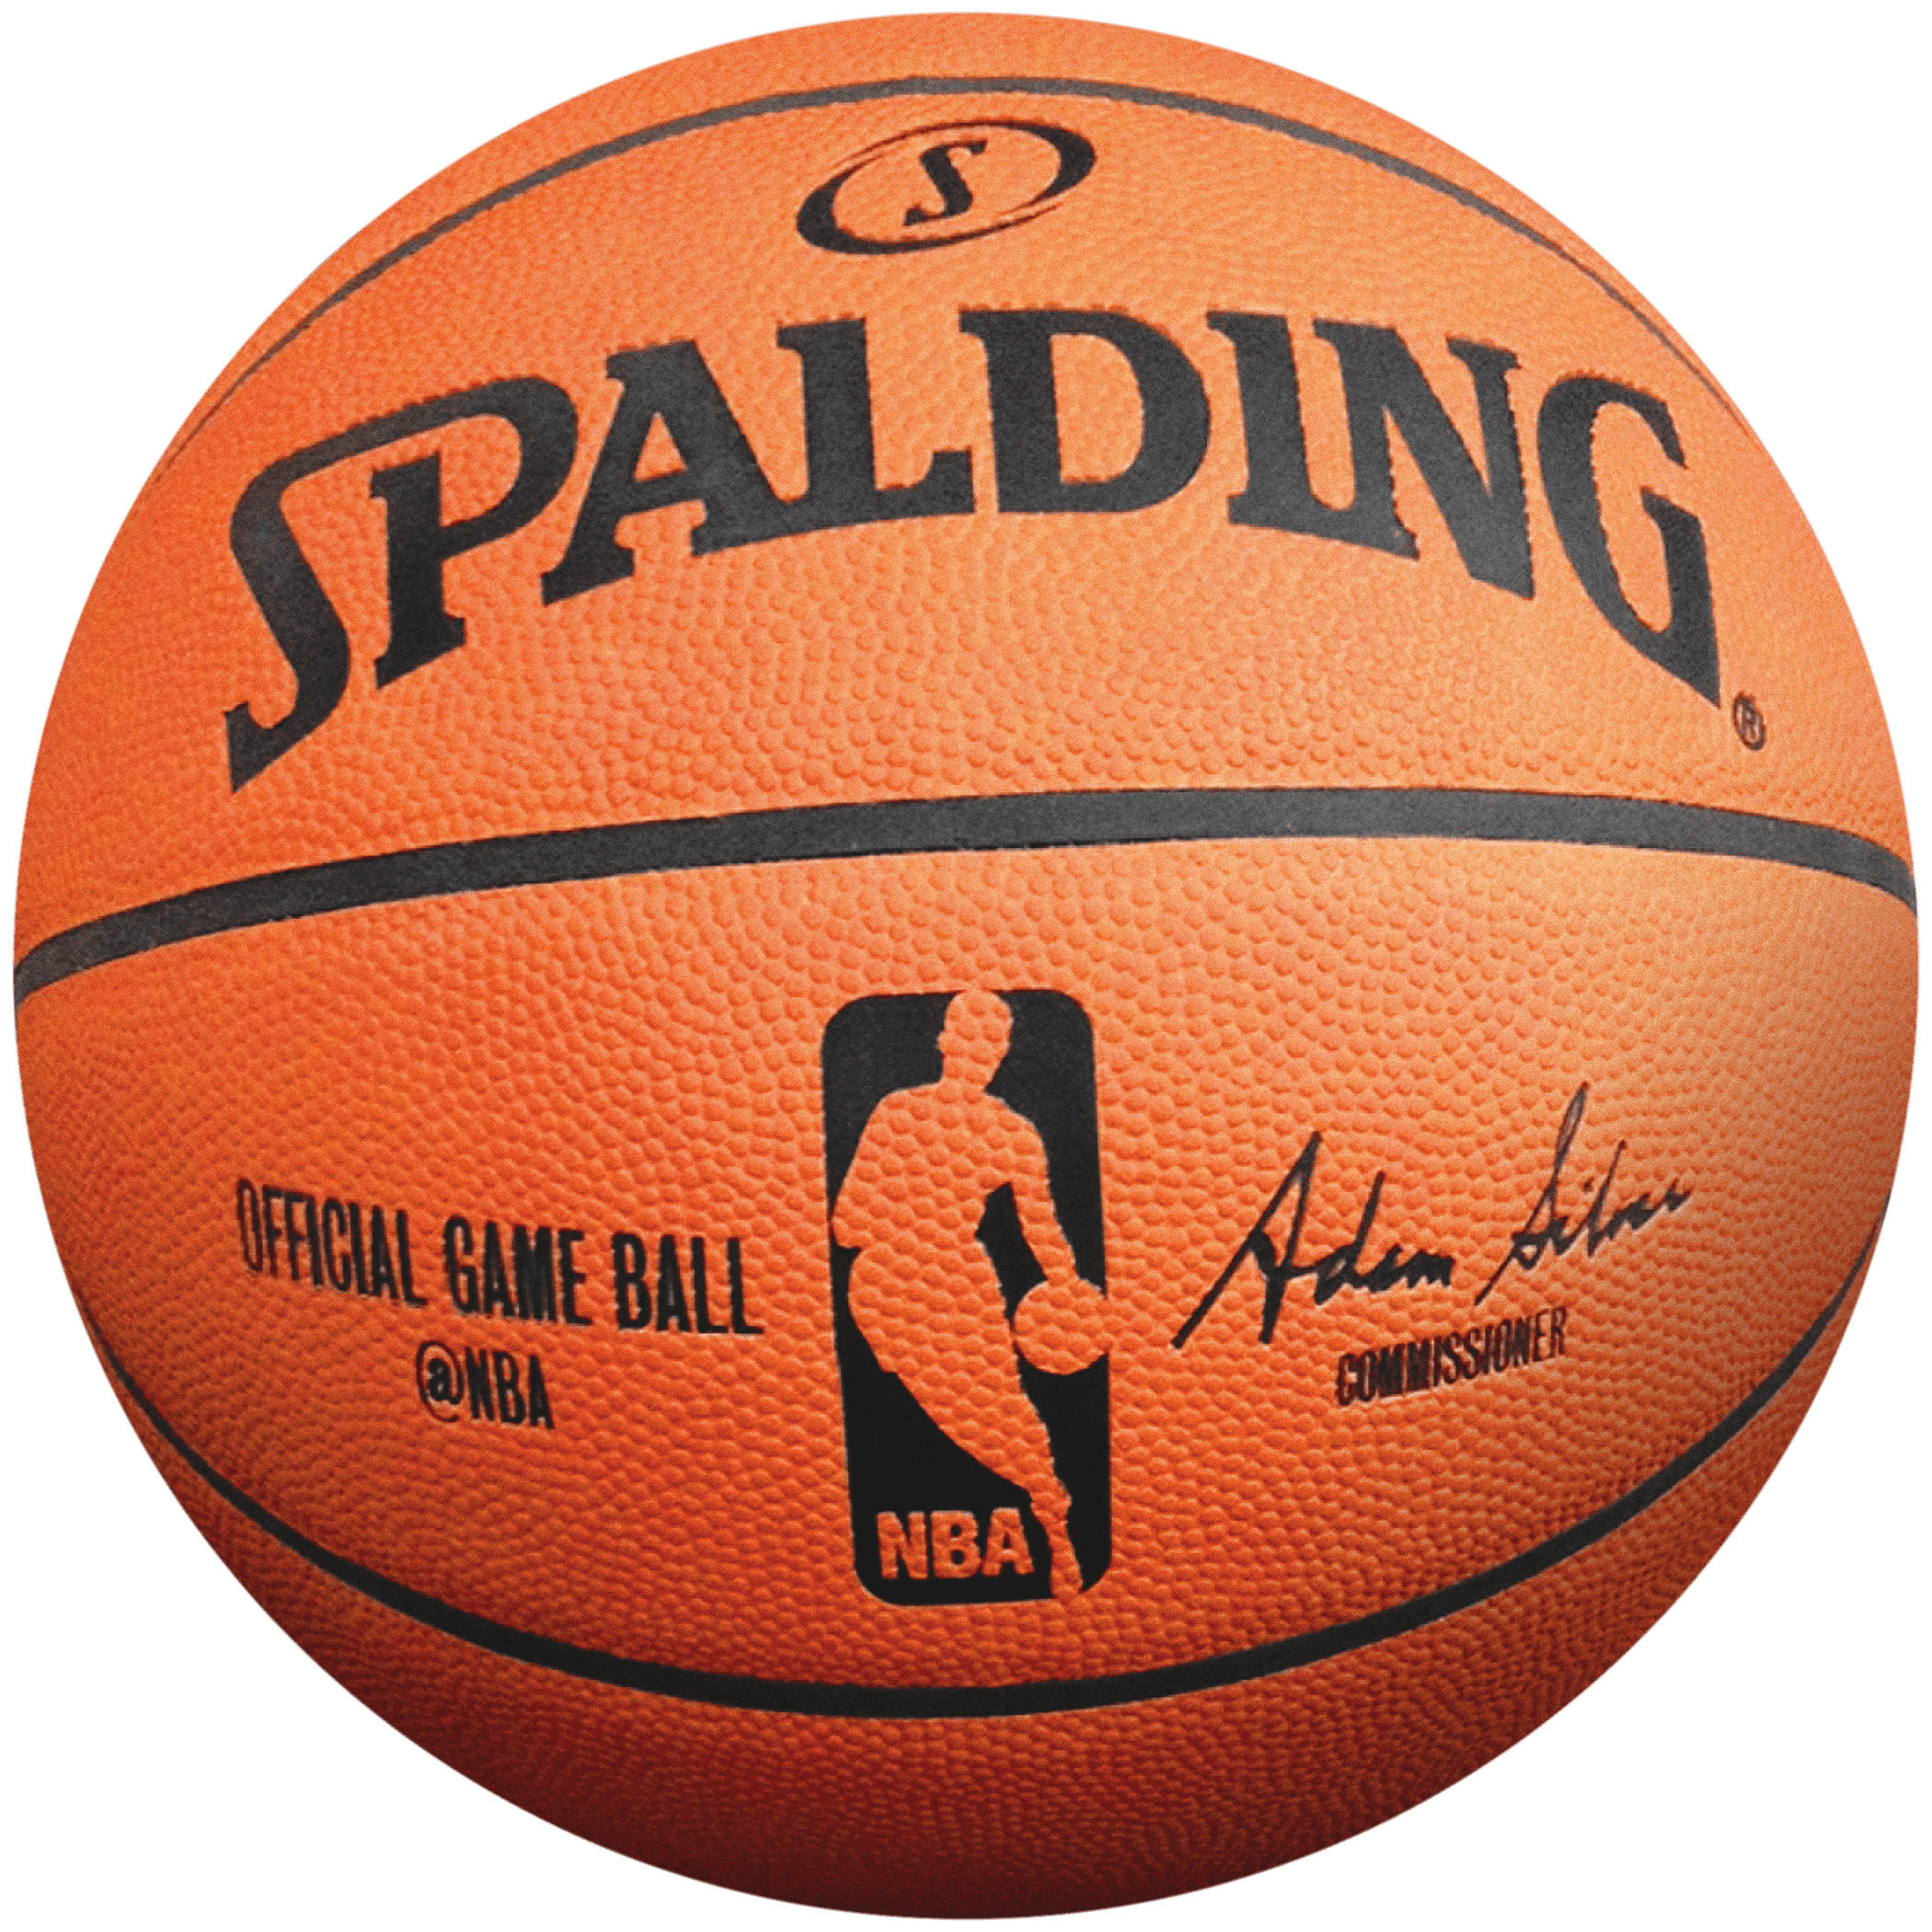 Spalding Basketball png